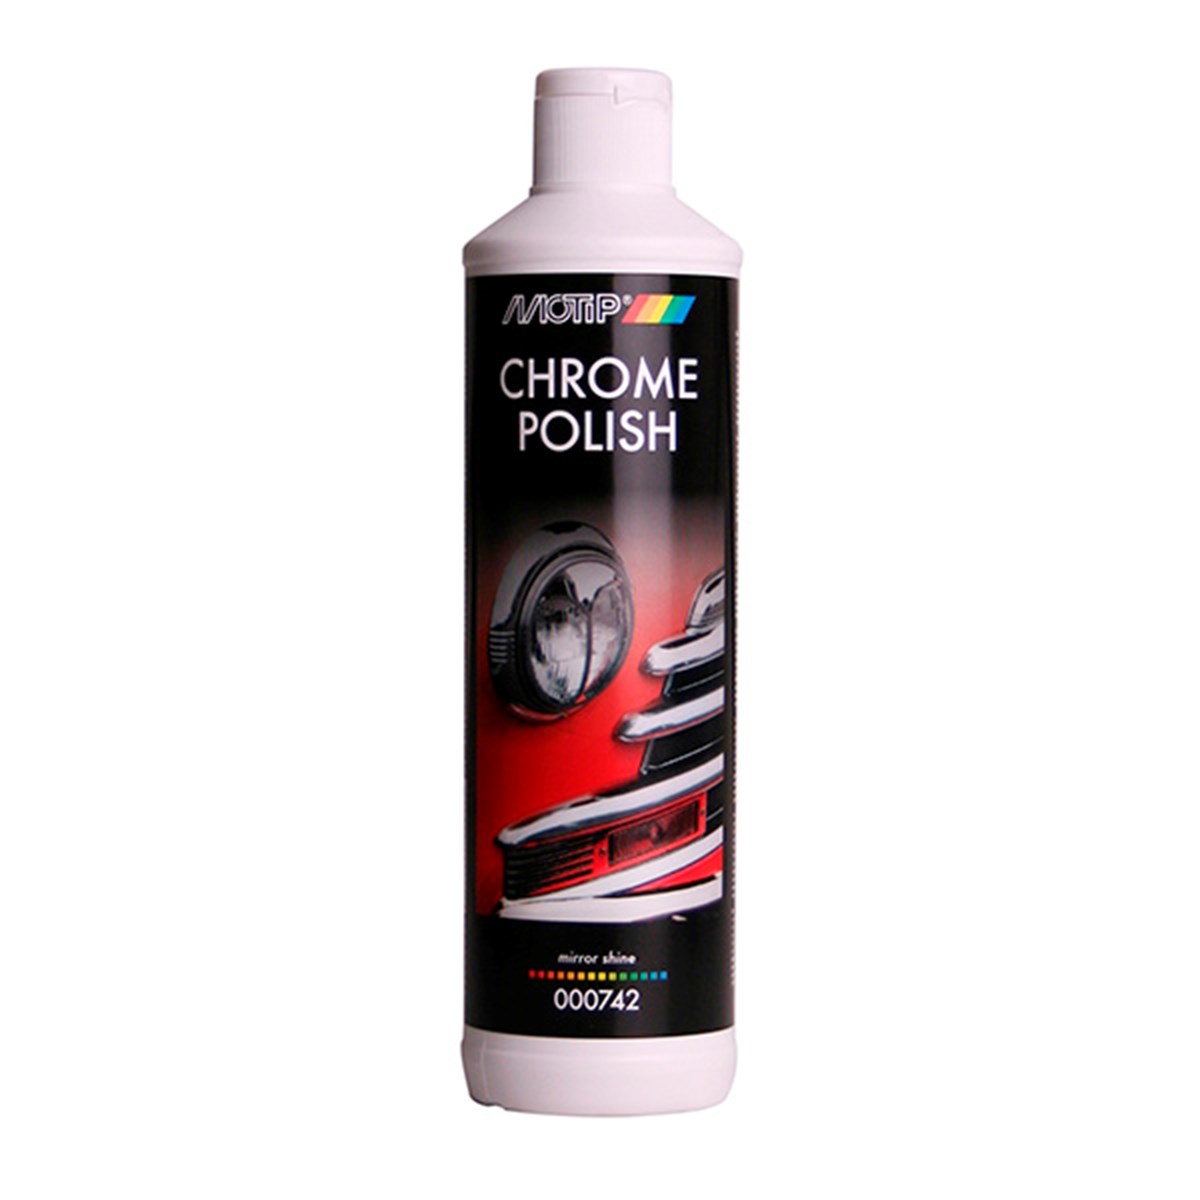 Chrome Polish - Polishing compound